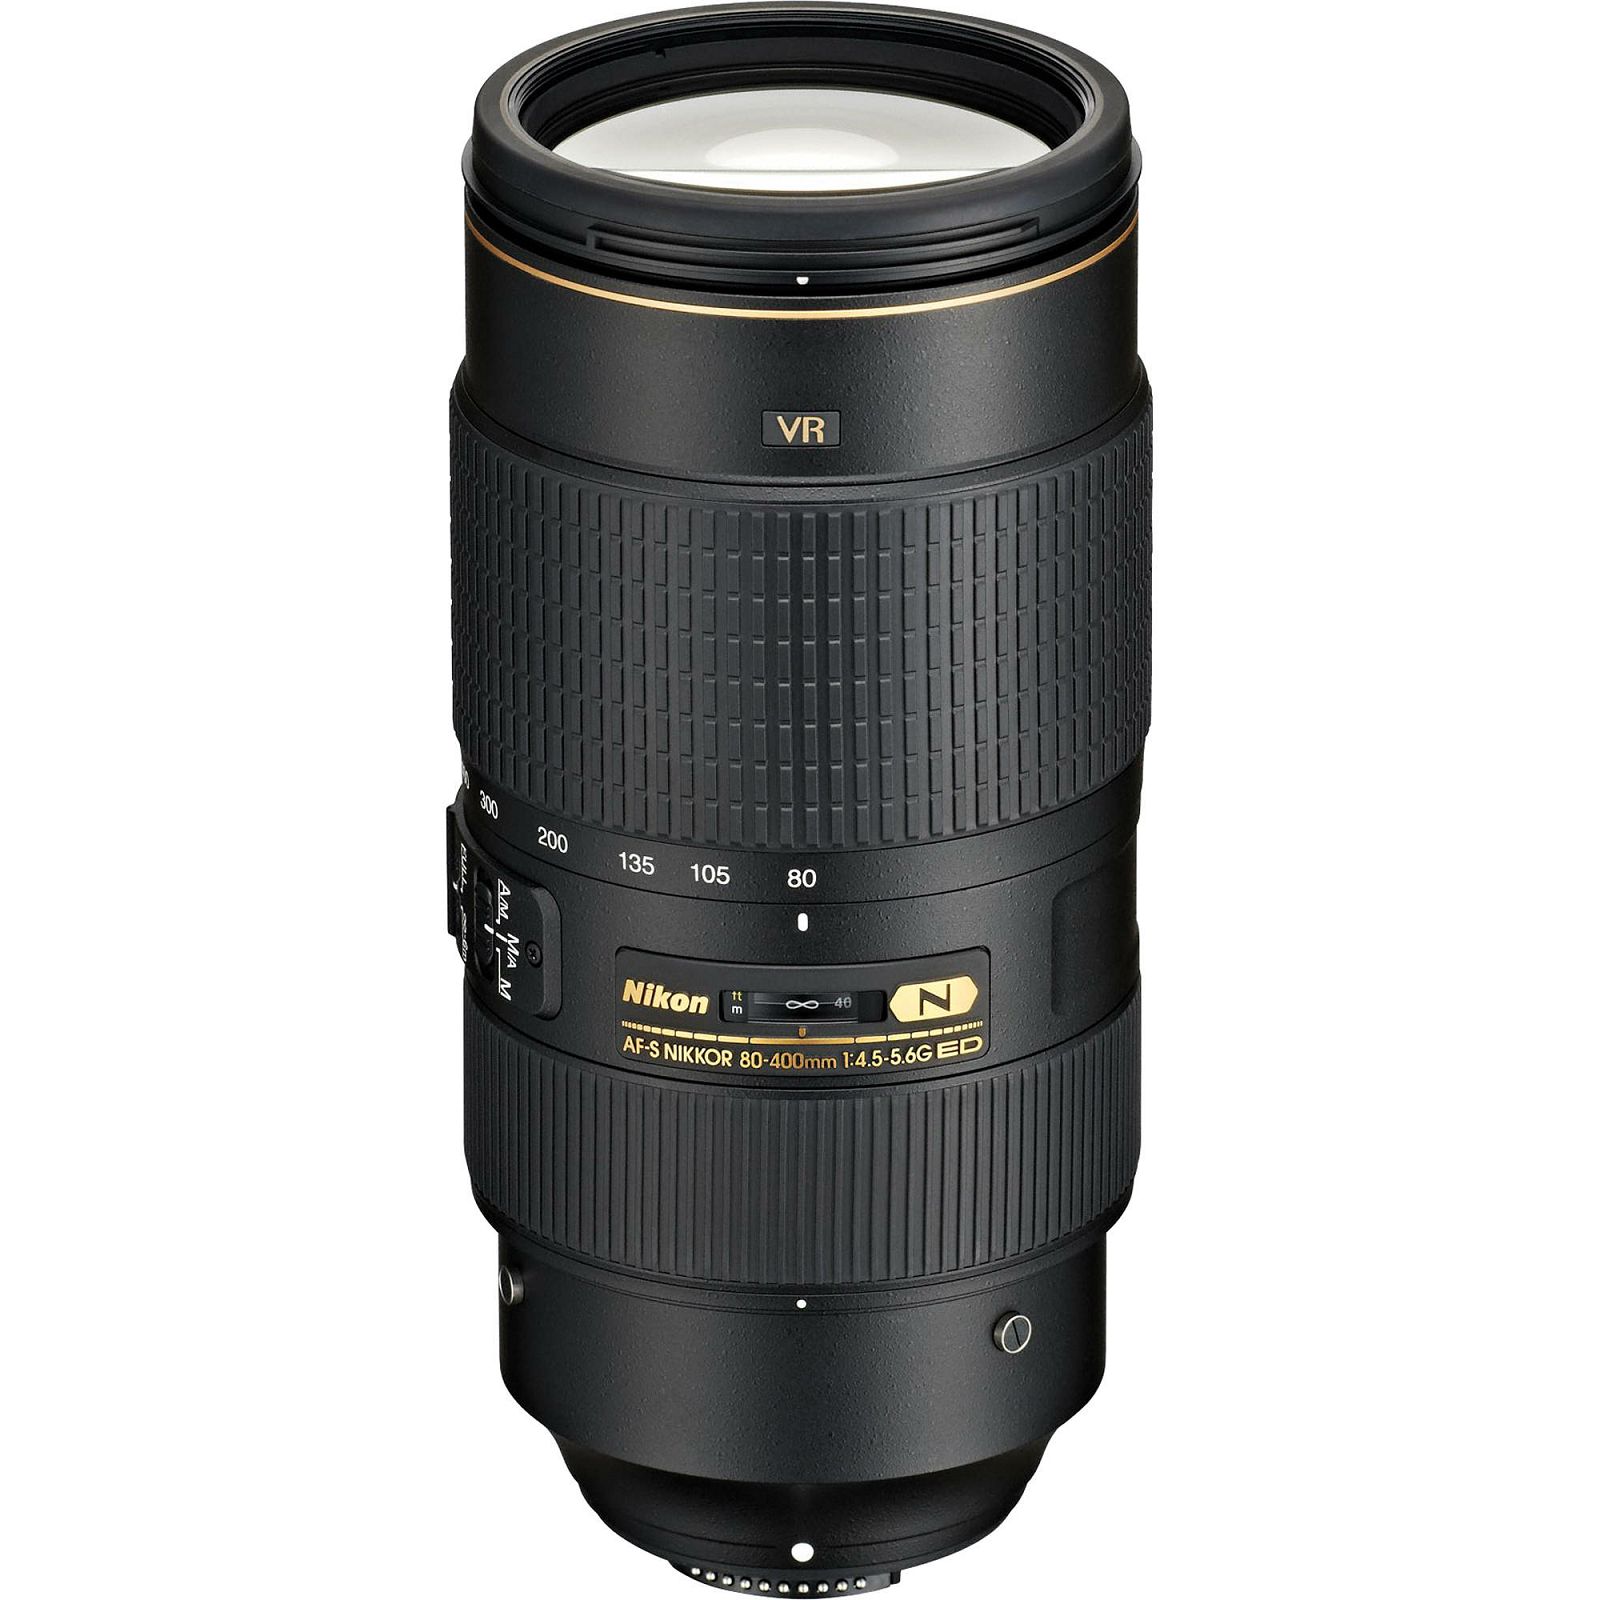 Nikon AF-S 80-400mm f/4.5-5.6G ED VR FX telefoto objektiv Nikkor 80-400 4.5-5.6 G auto focus zoom lens (JAA817EA)